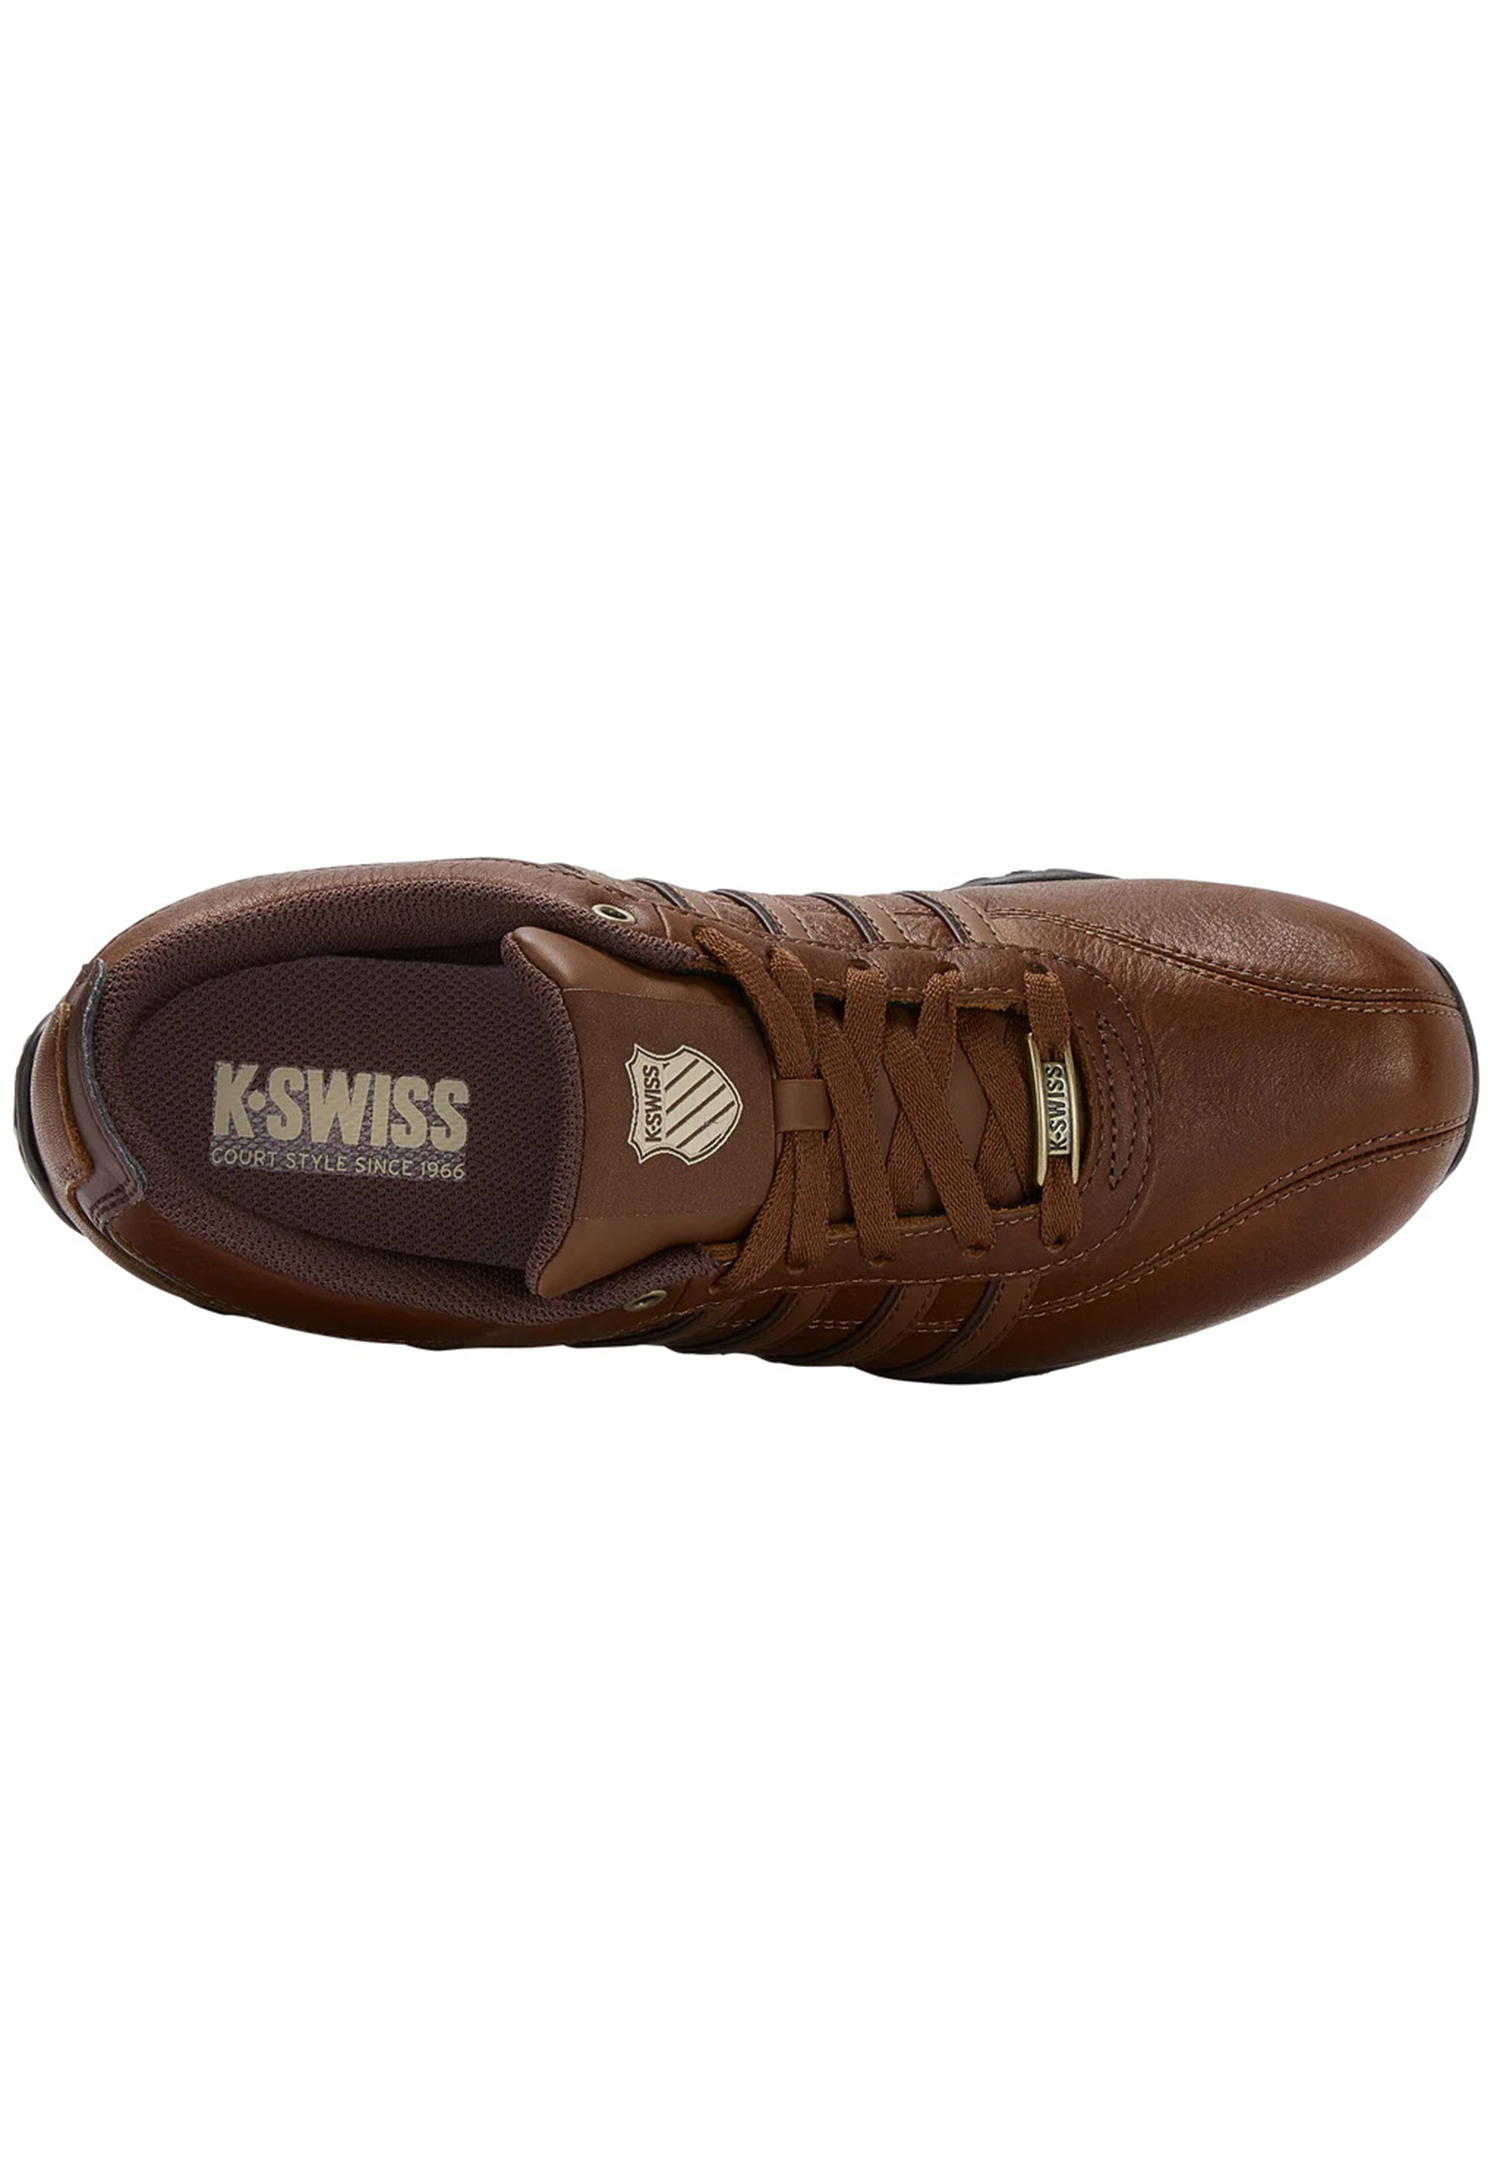 K-SWISS Arvee 1.5 Herren Sneaker Sportschuhe 02453-214-M braun